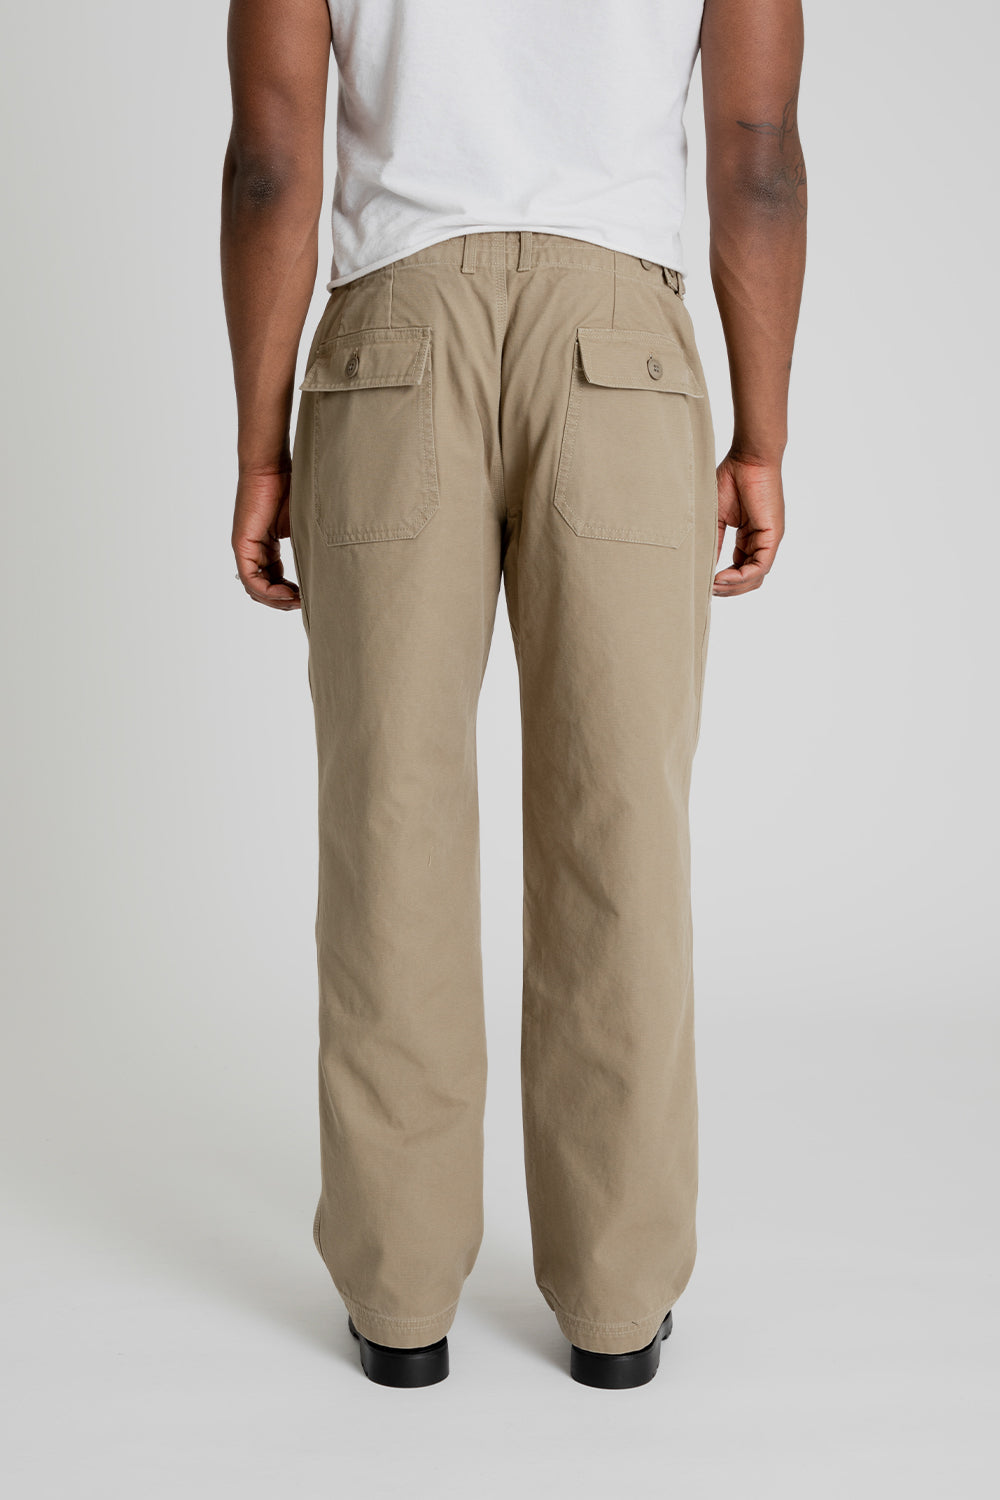 Frizmworks Jungle Cloth Fatigue Pants in Khaki Beige | Wallace 